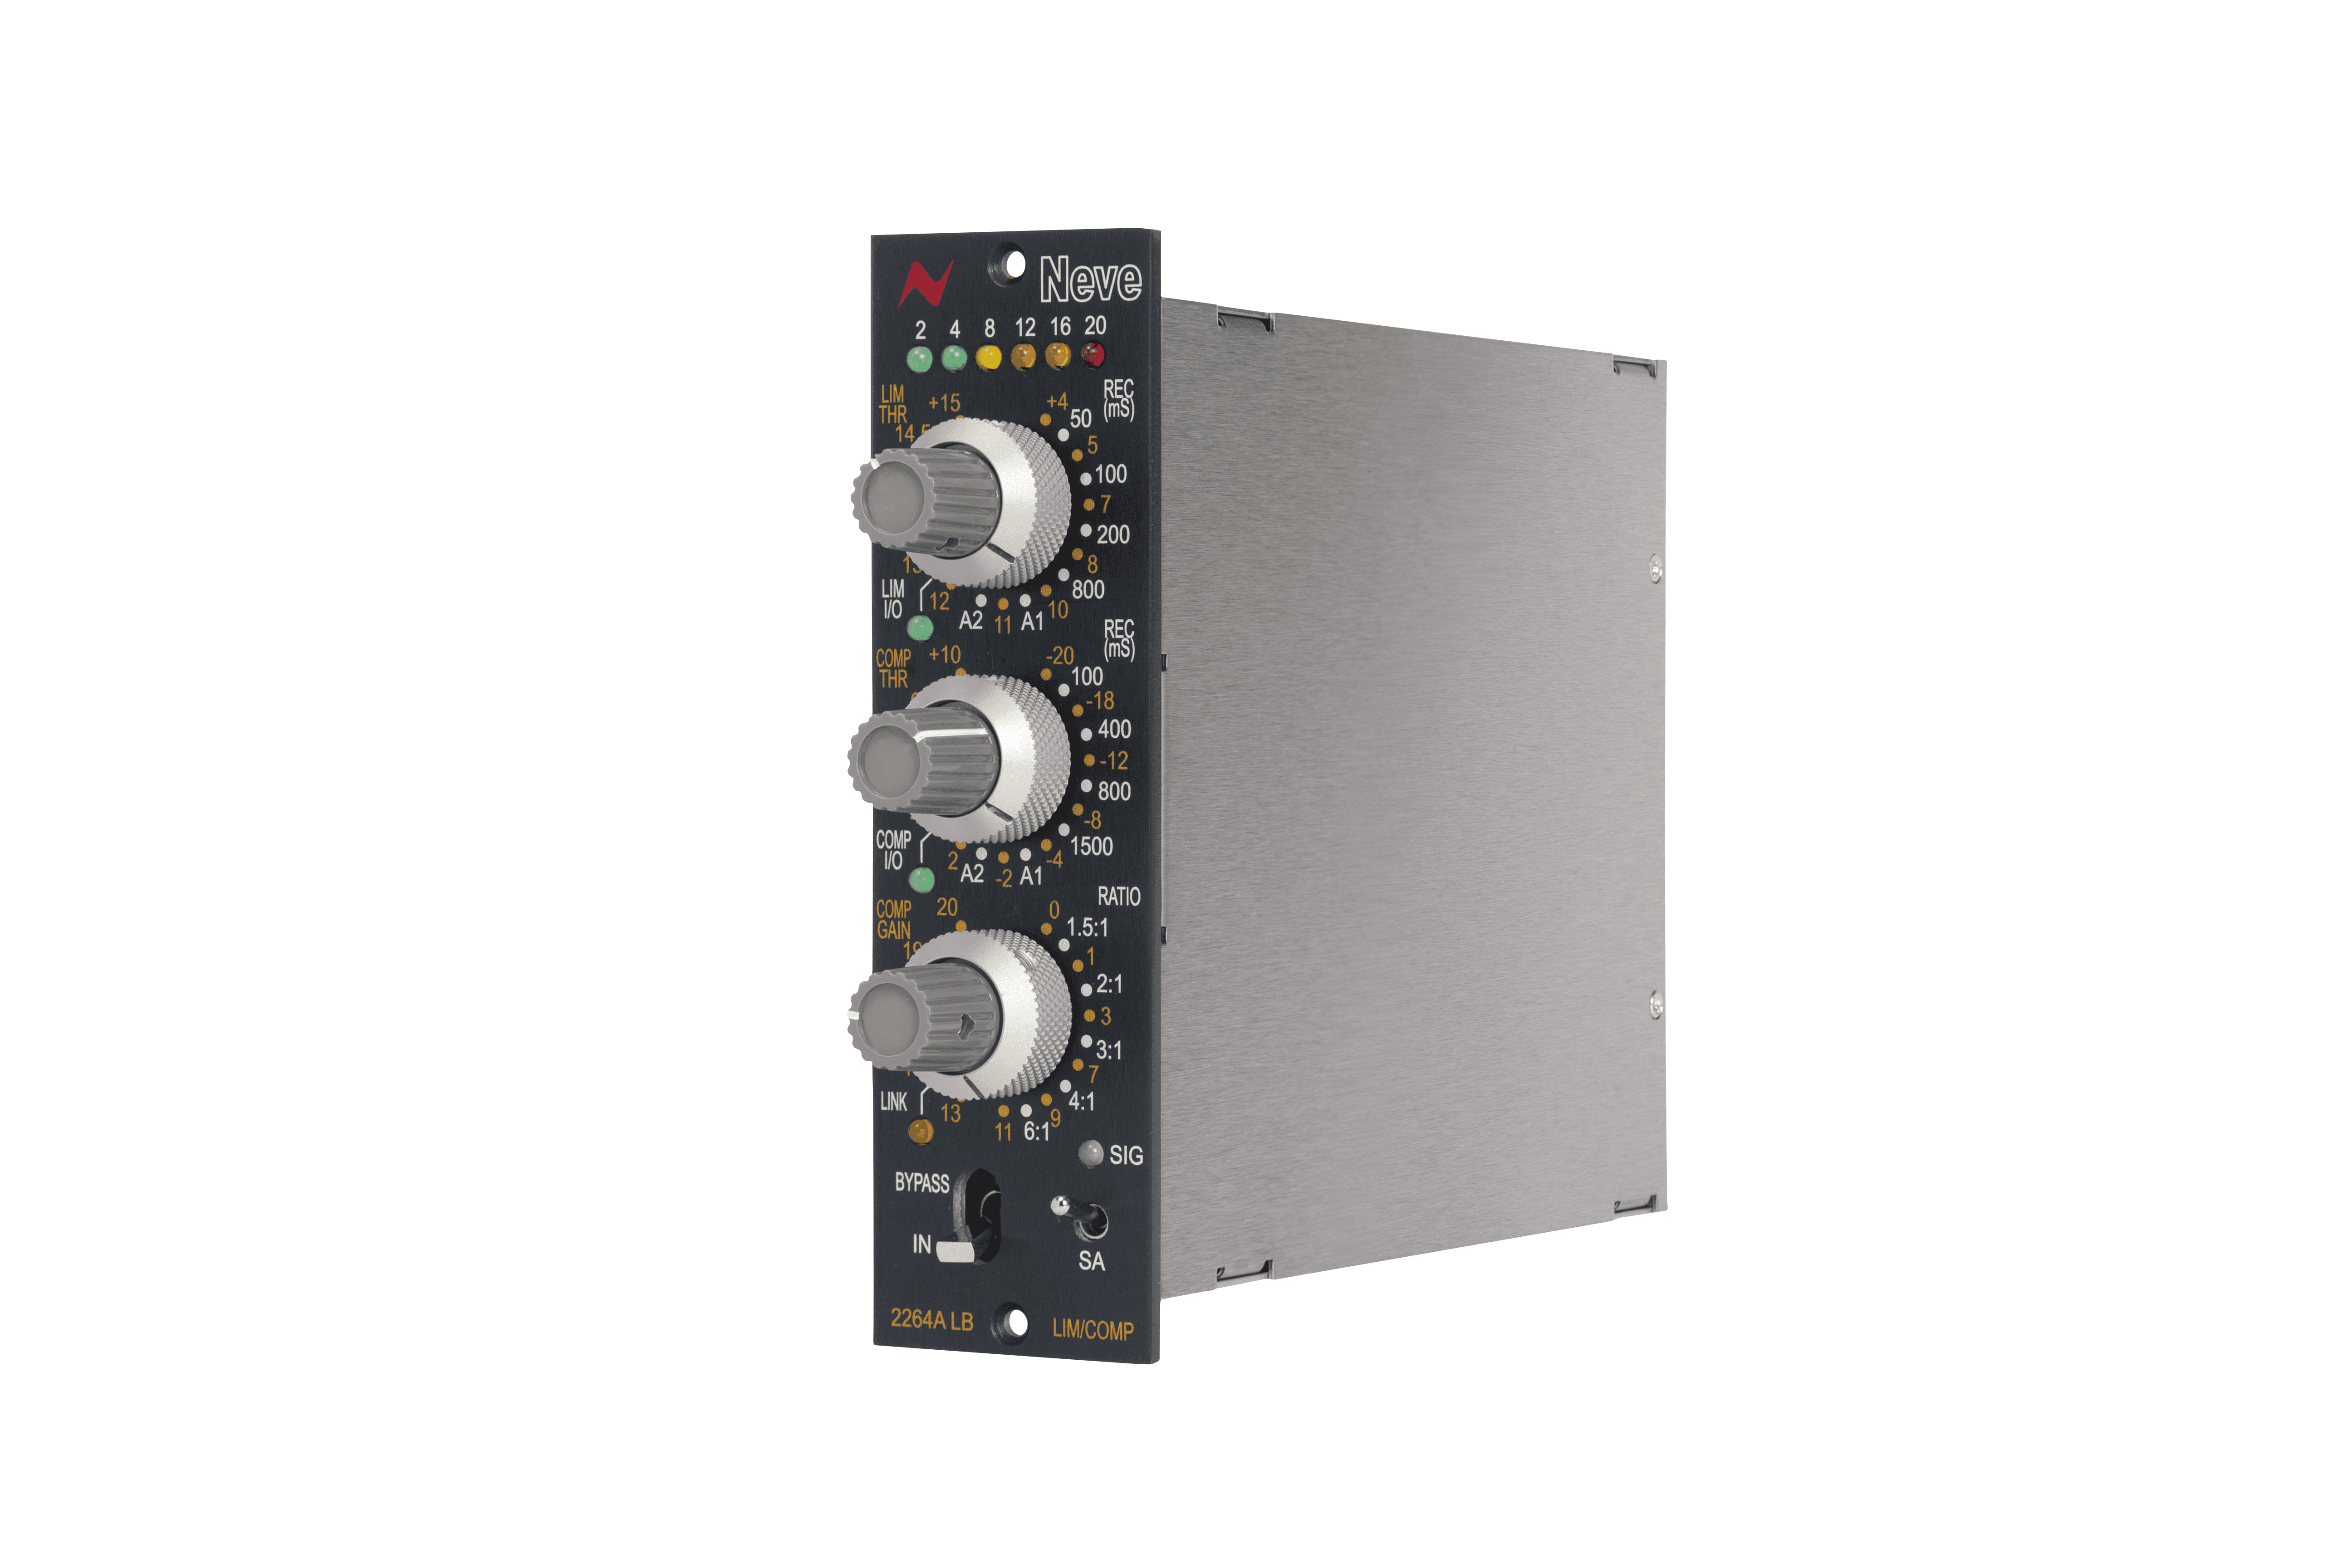 Recording Equipment - AMS Neve - AMS Neve 2264ALB 500 Series Mono Limiter/Compressor Module - Professional Audio Design, Inc